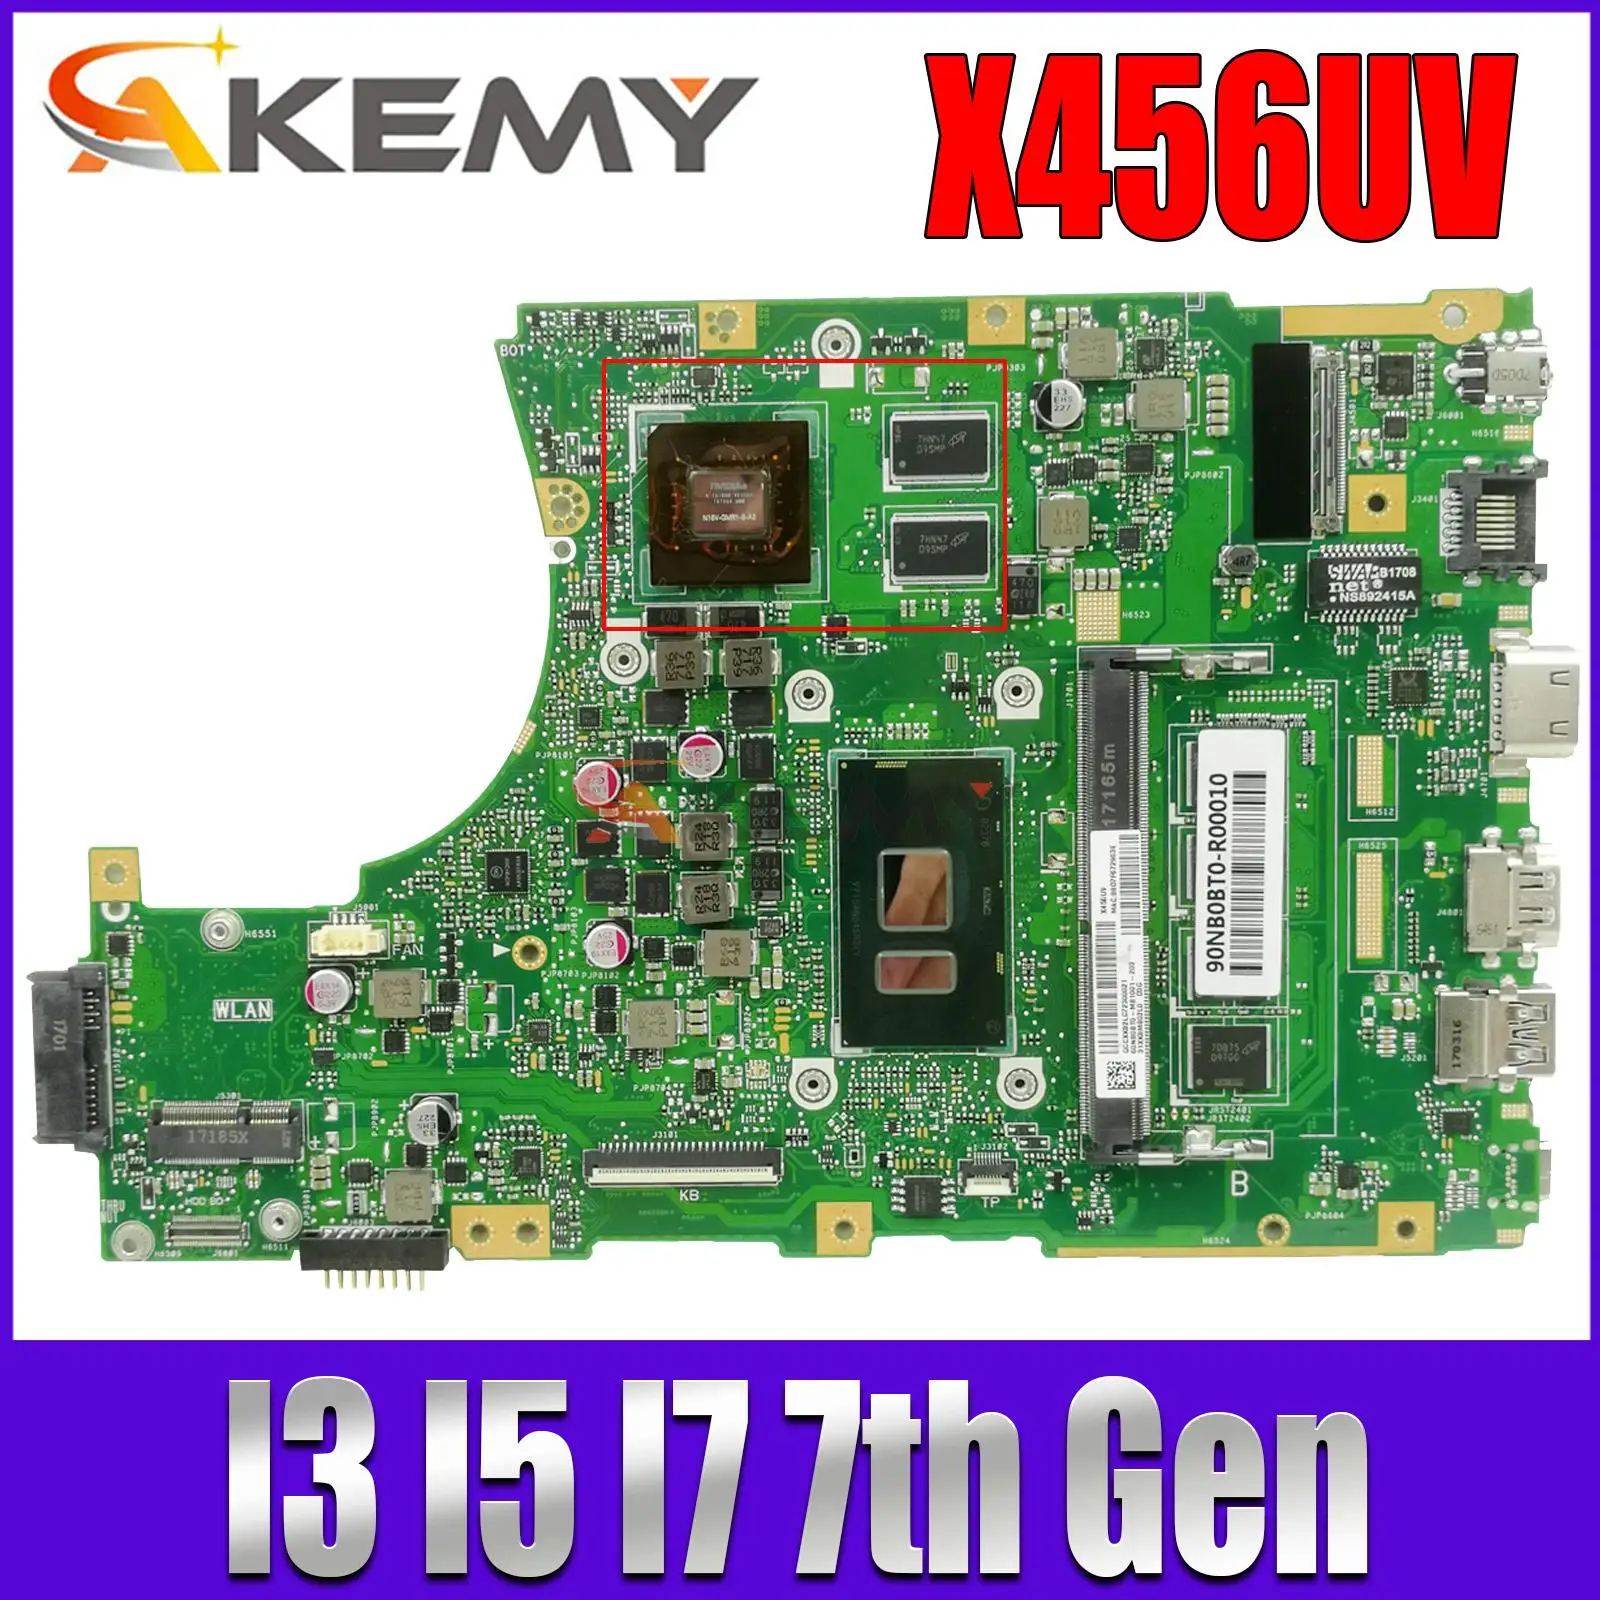 

X456UVK X456UQ X456UJ A456U X456UB F456U X456UV X456 X456UA Laptop Motherboard X456UQK Mainboard I3 I5 I7 DDR3/DDR4 UMA/PM